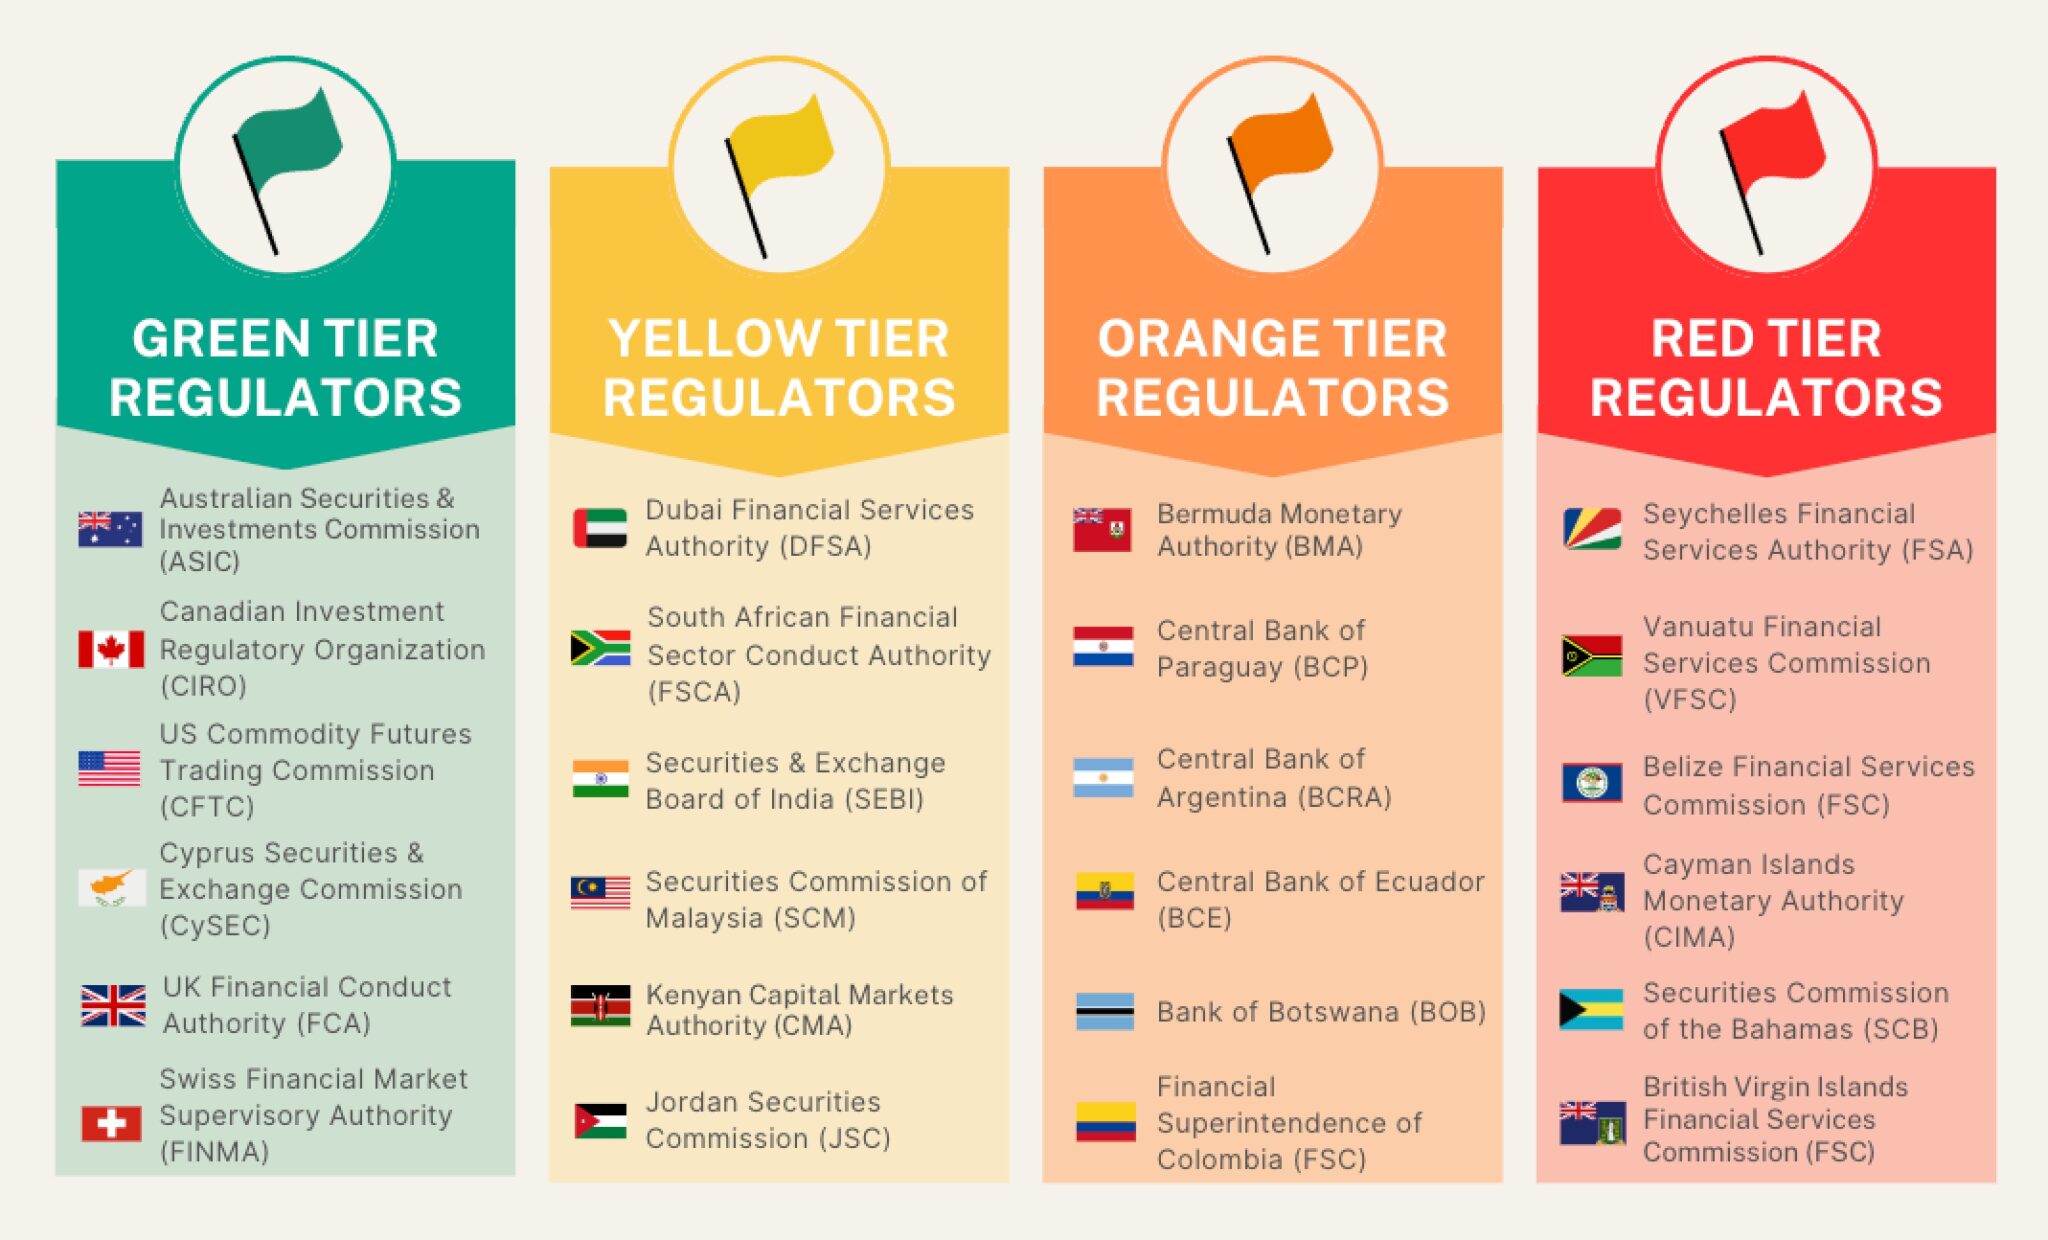 Regulator tiers for regulation and trust rating